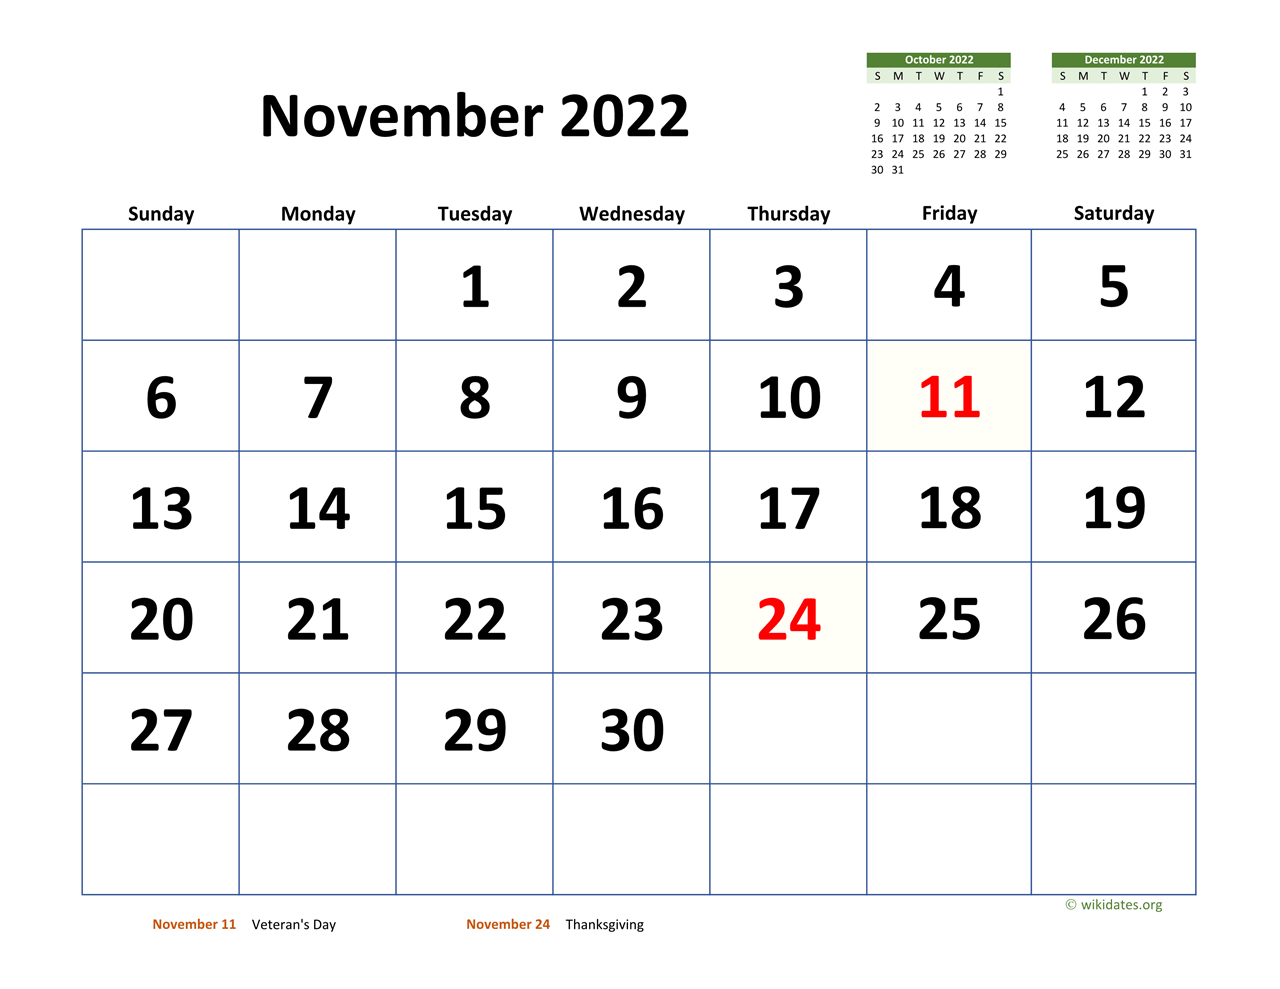 Novermber 2022 Calendar November 2022 Calendar With Extra-Large Dates | Wikidates.org